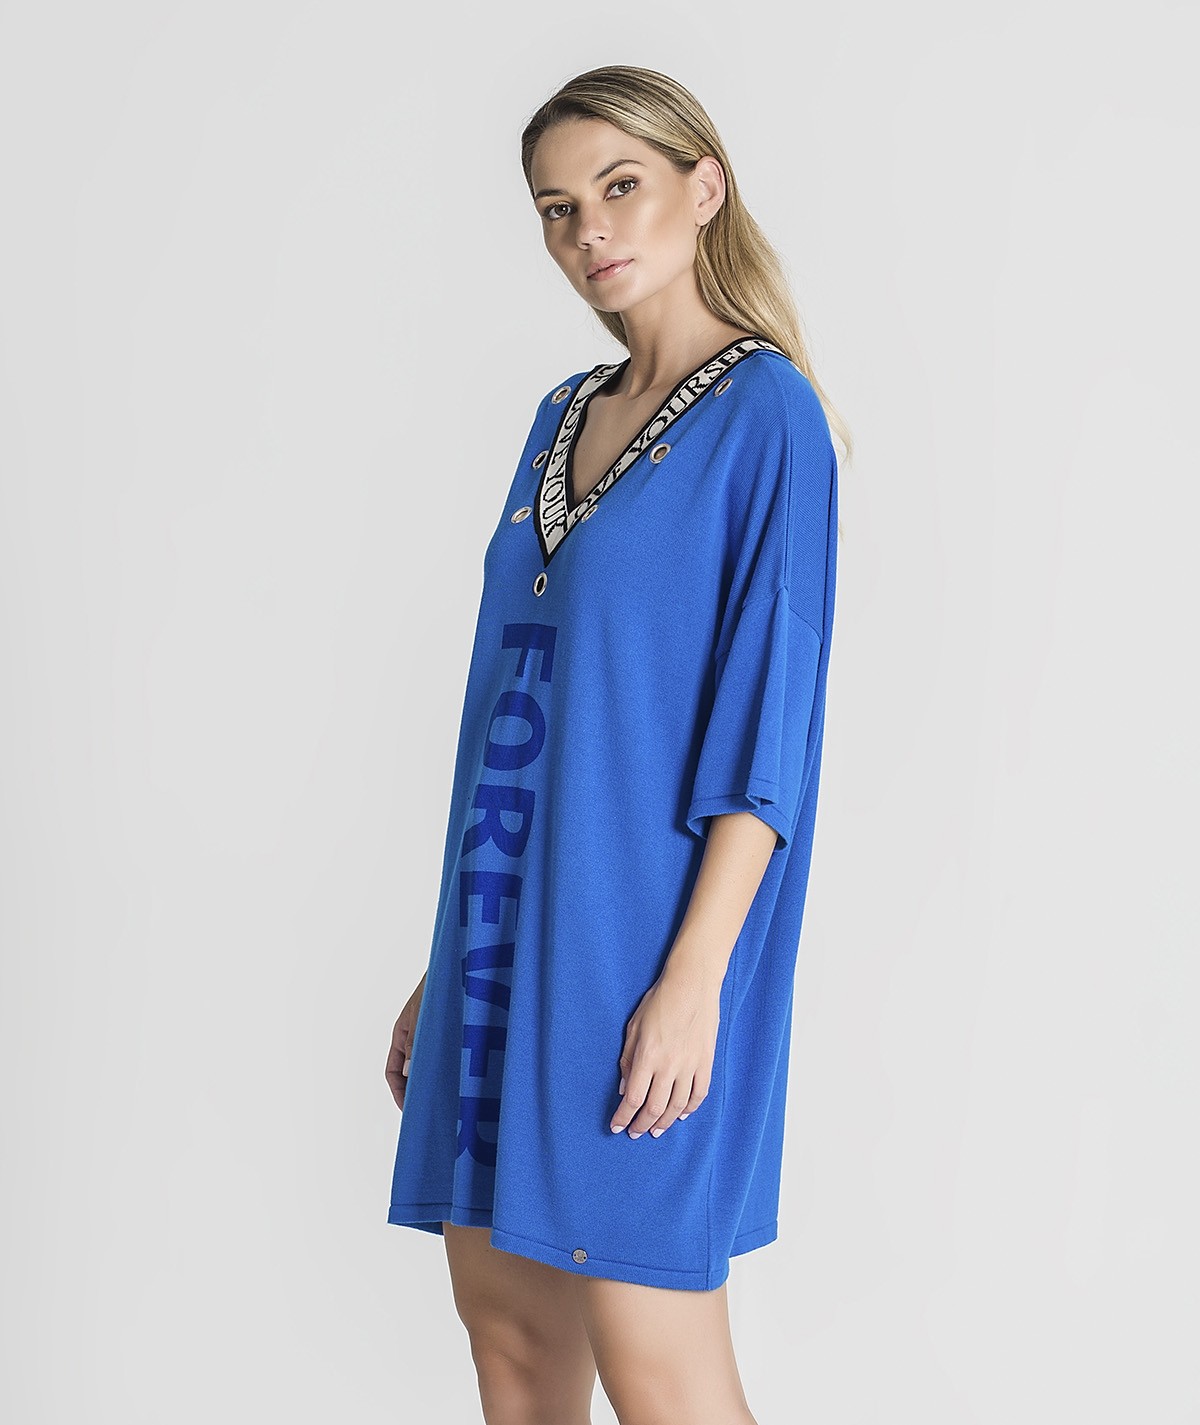 Ewell unidad definido Jersey Forever Ojales Azul - Stártara Shop Tienda online Boho Chic